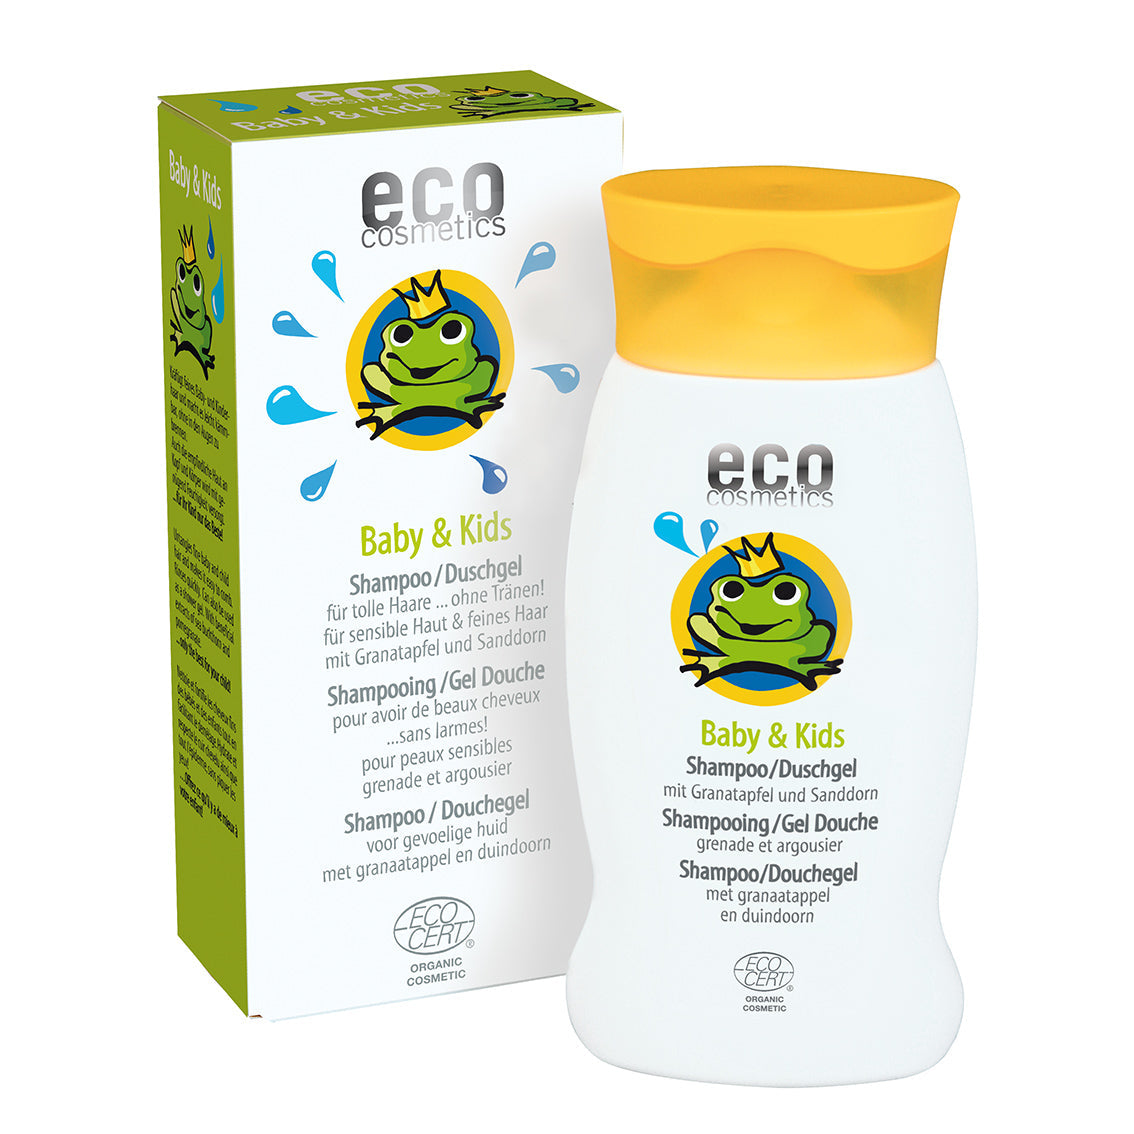 Eco Cosmetics lasten shampoo & kylpygeeli